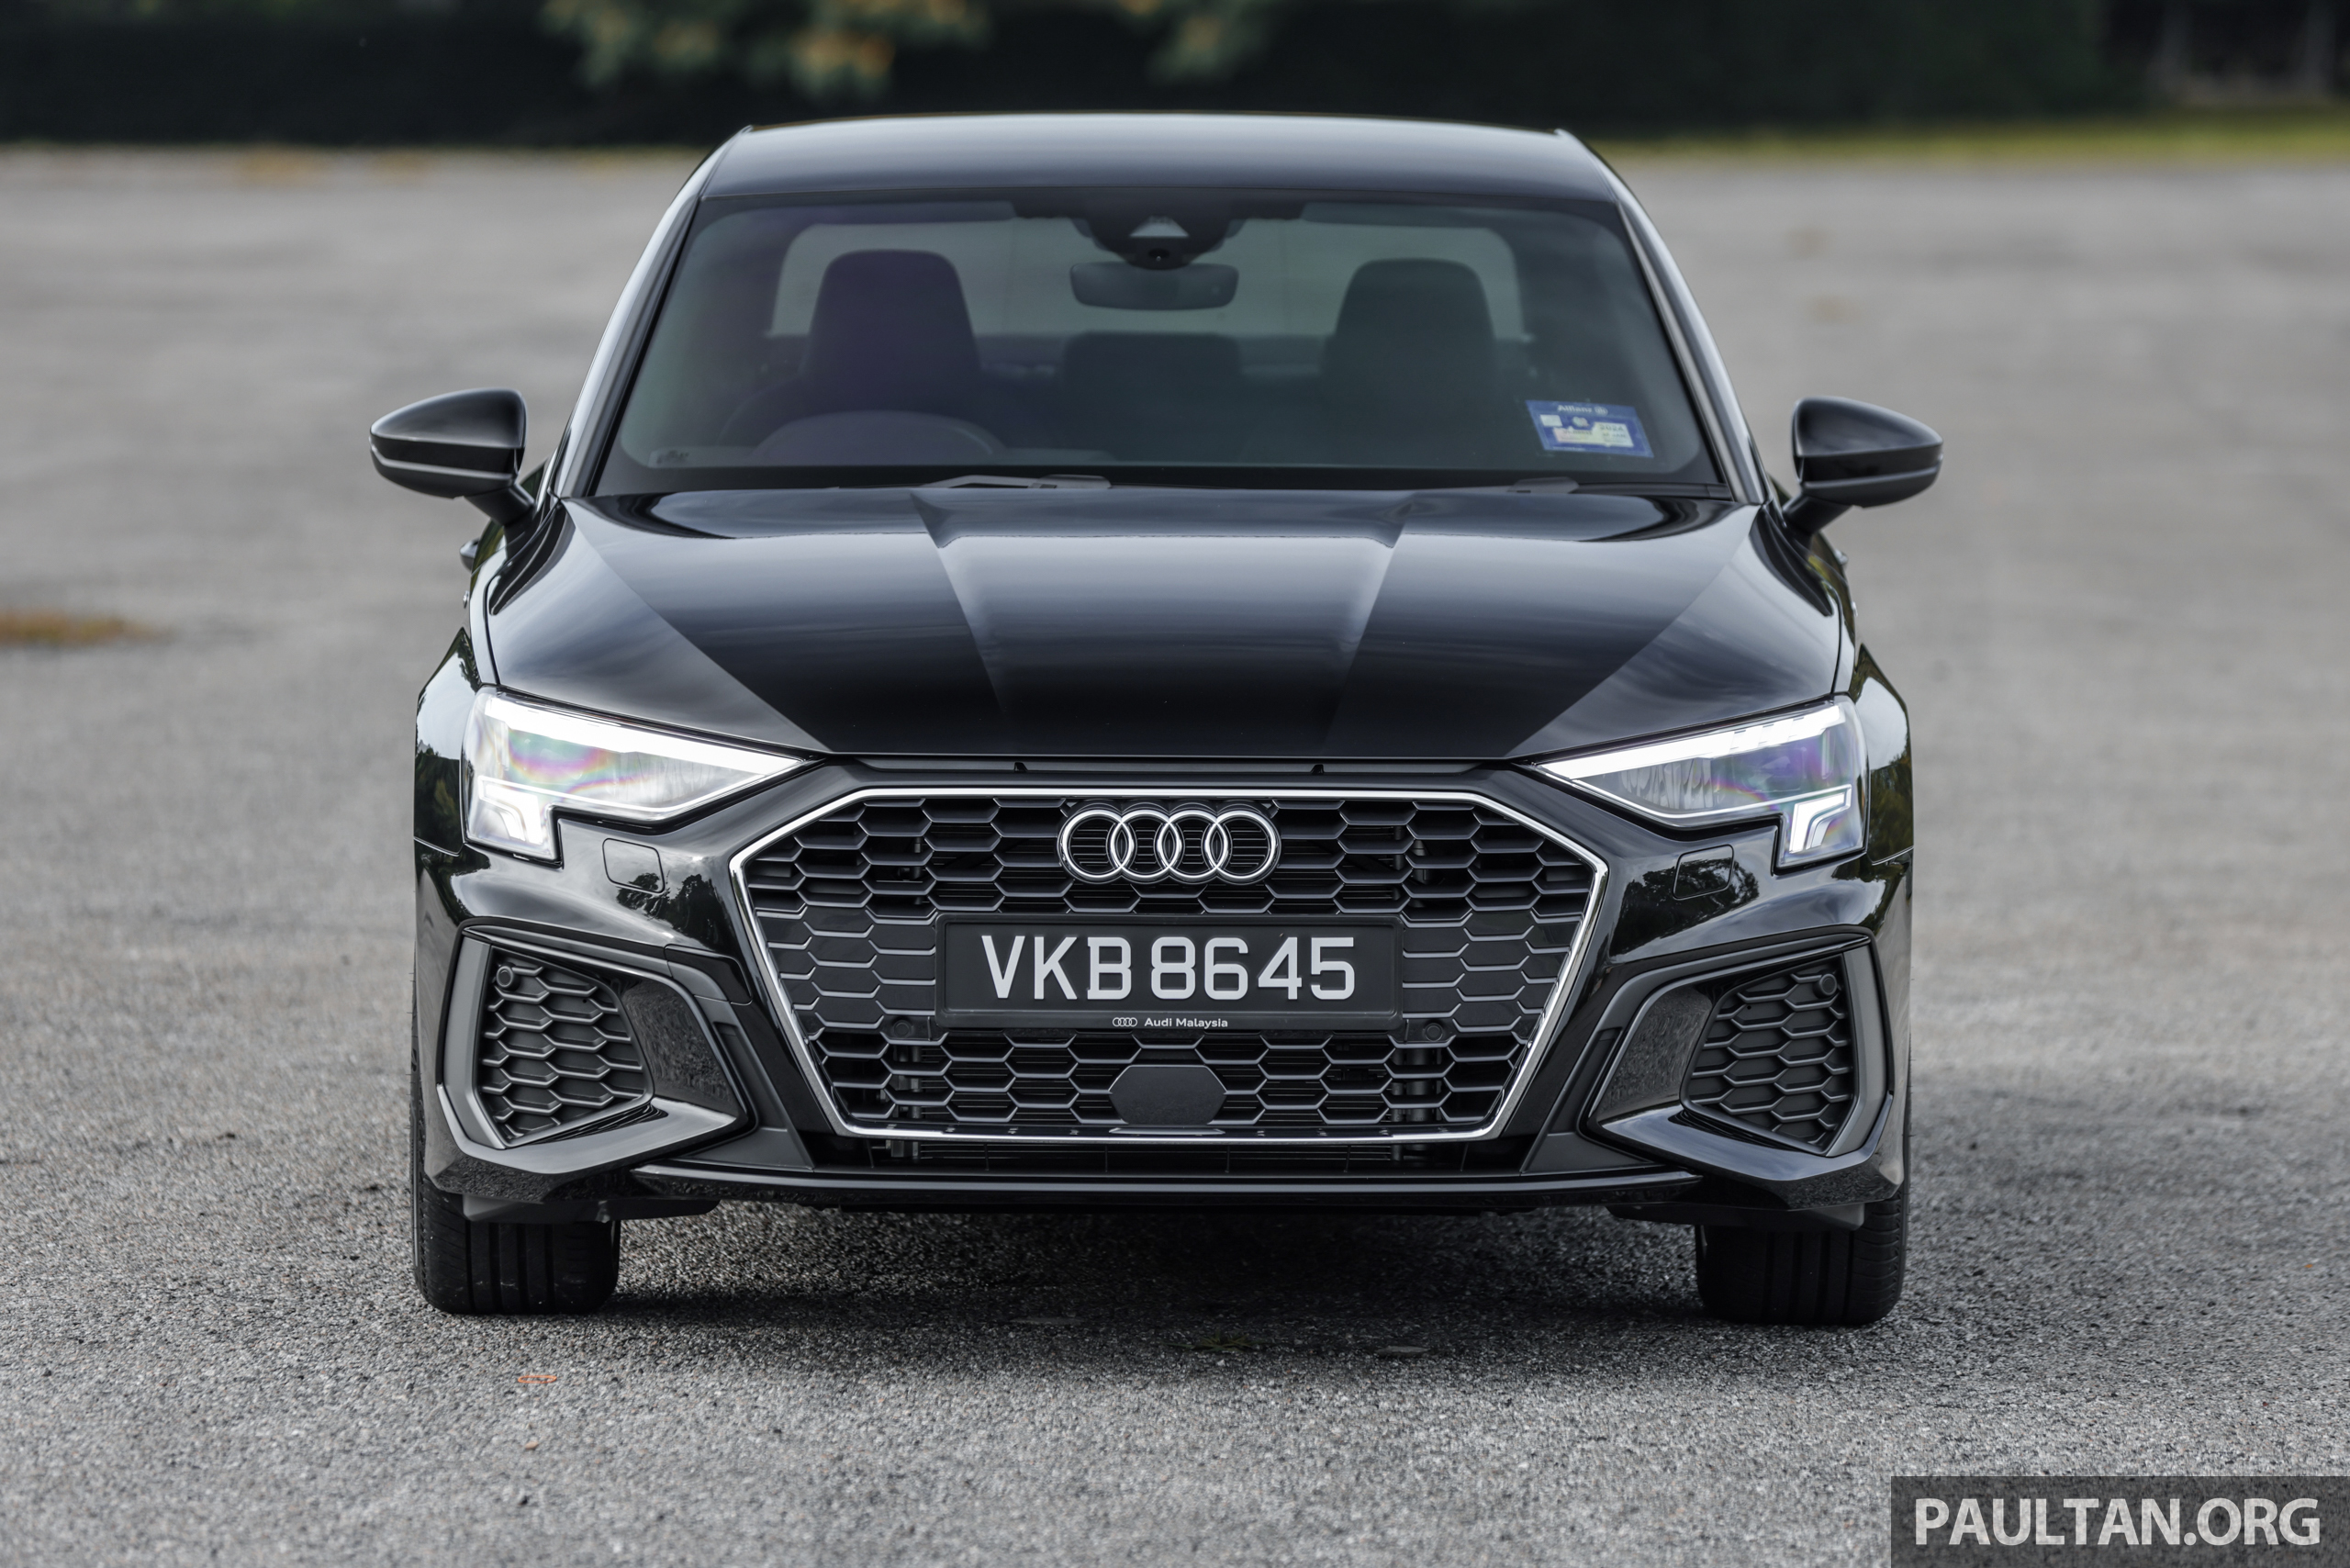 2023_Audi_A3_Sedan_SLine_Malaysia_Ext-9 - Paul Tan's Automotive News